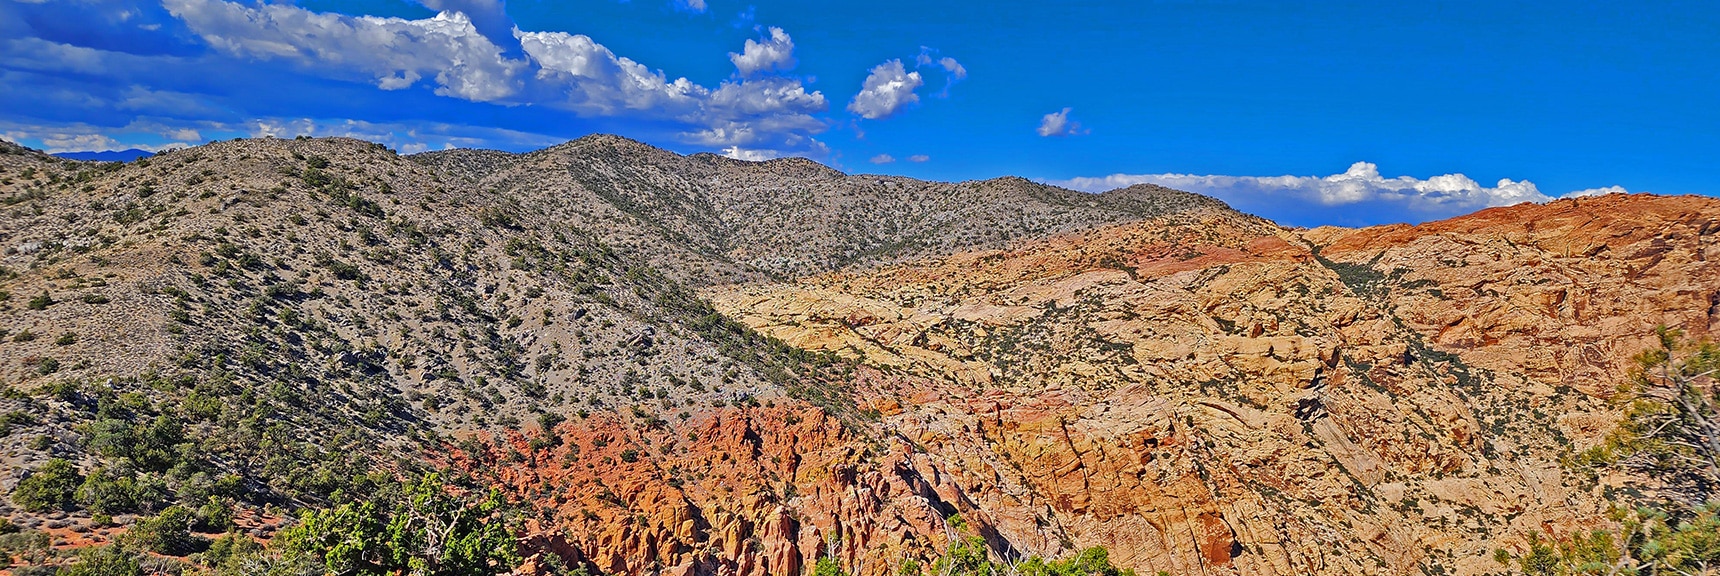 Additional View to Upper Crest Ridgeline and Keystone Thrust Faultline. | Hollow Rock Peak | Rainbow Mountain Wilderness, Nevada